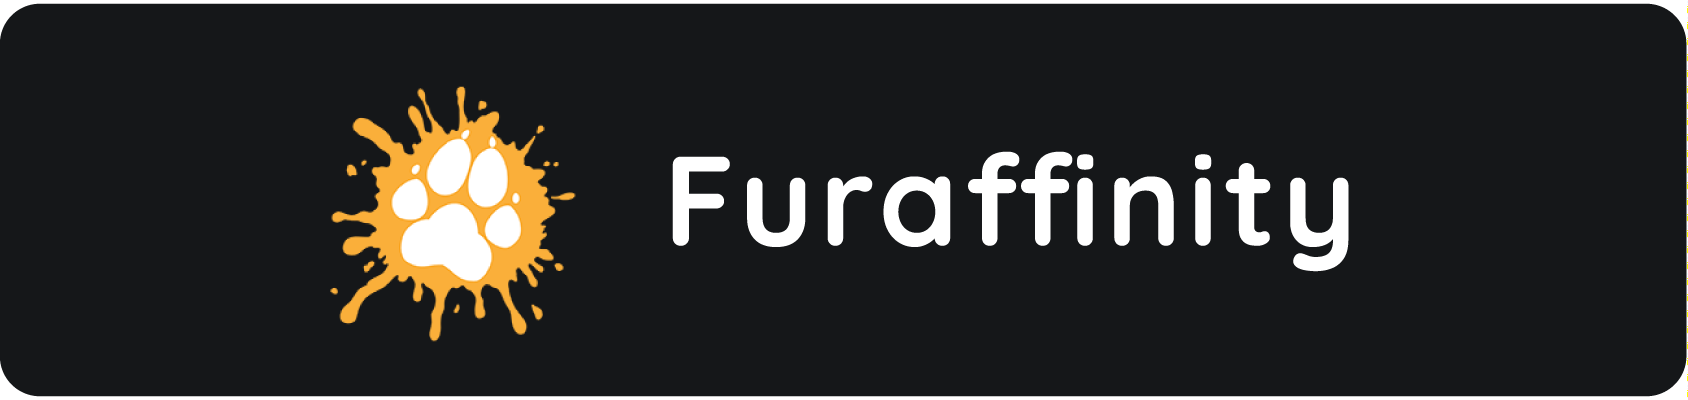 Furaffinity